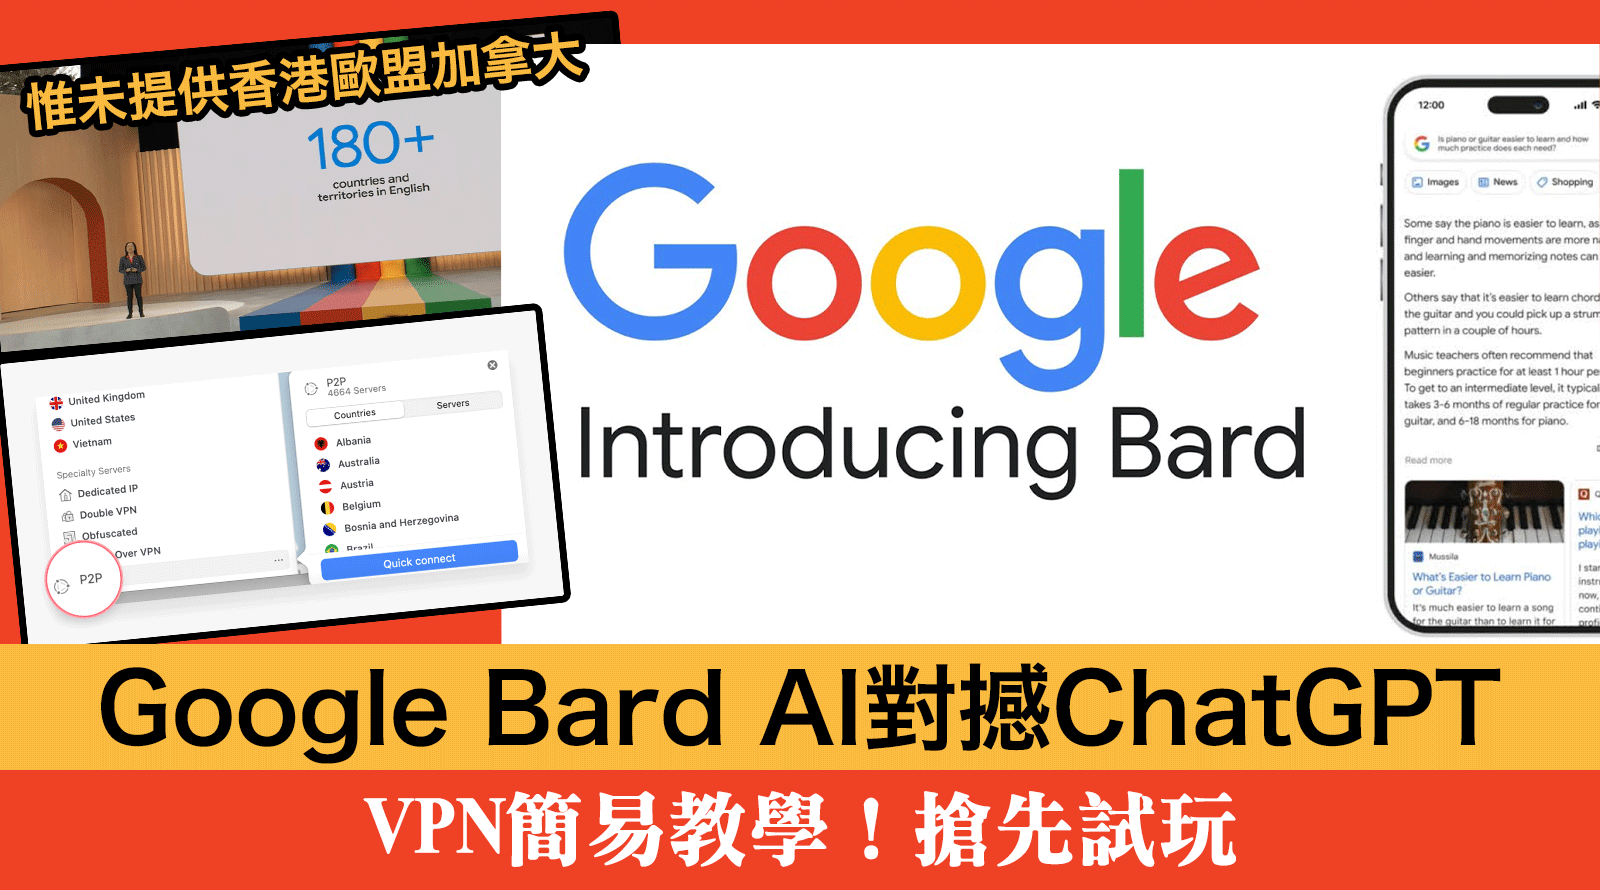 Google-Bard-AI對撼ChatGPT！惟未提供香港歐盟加拿大丨VPN簡易教學！搶先試玩